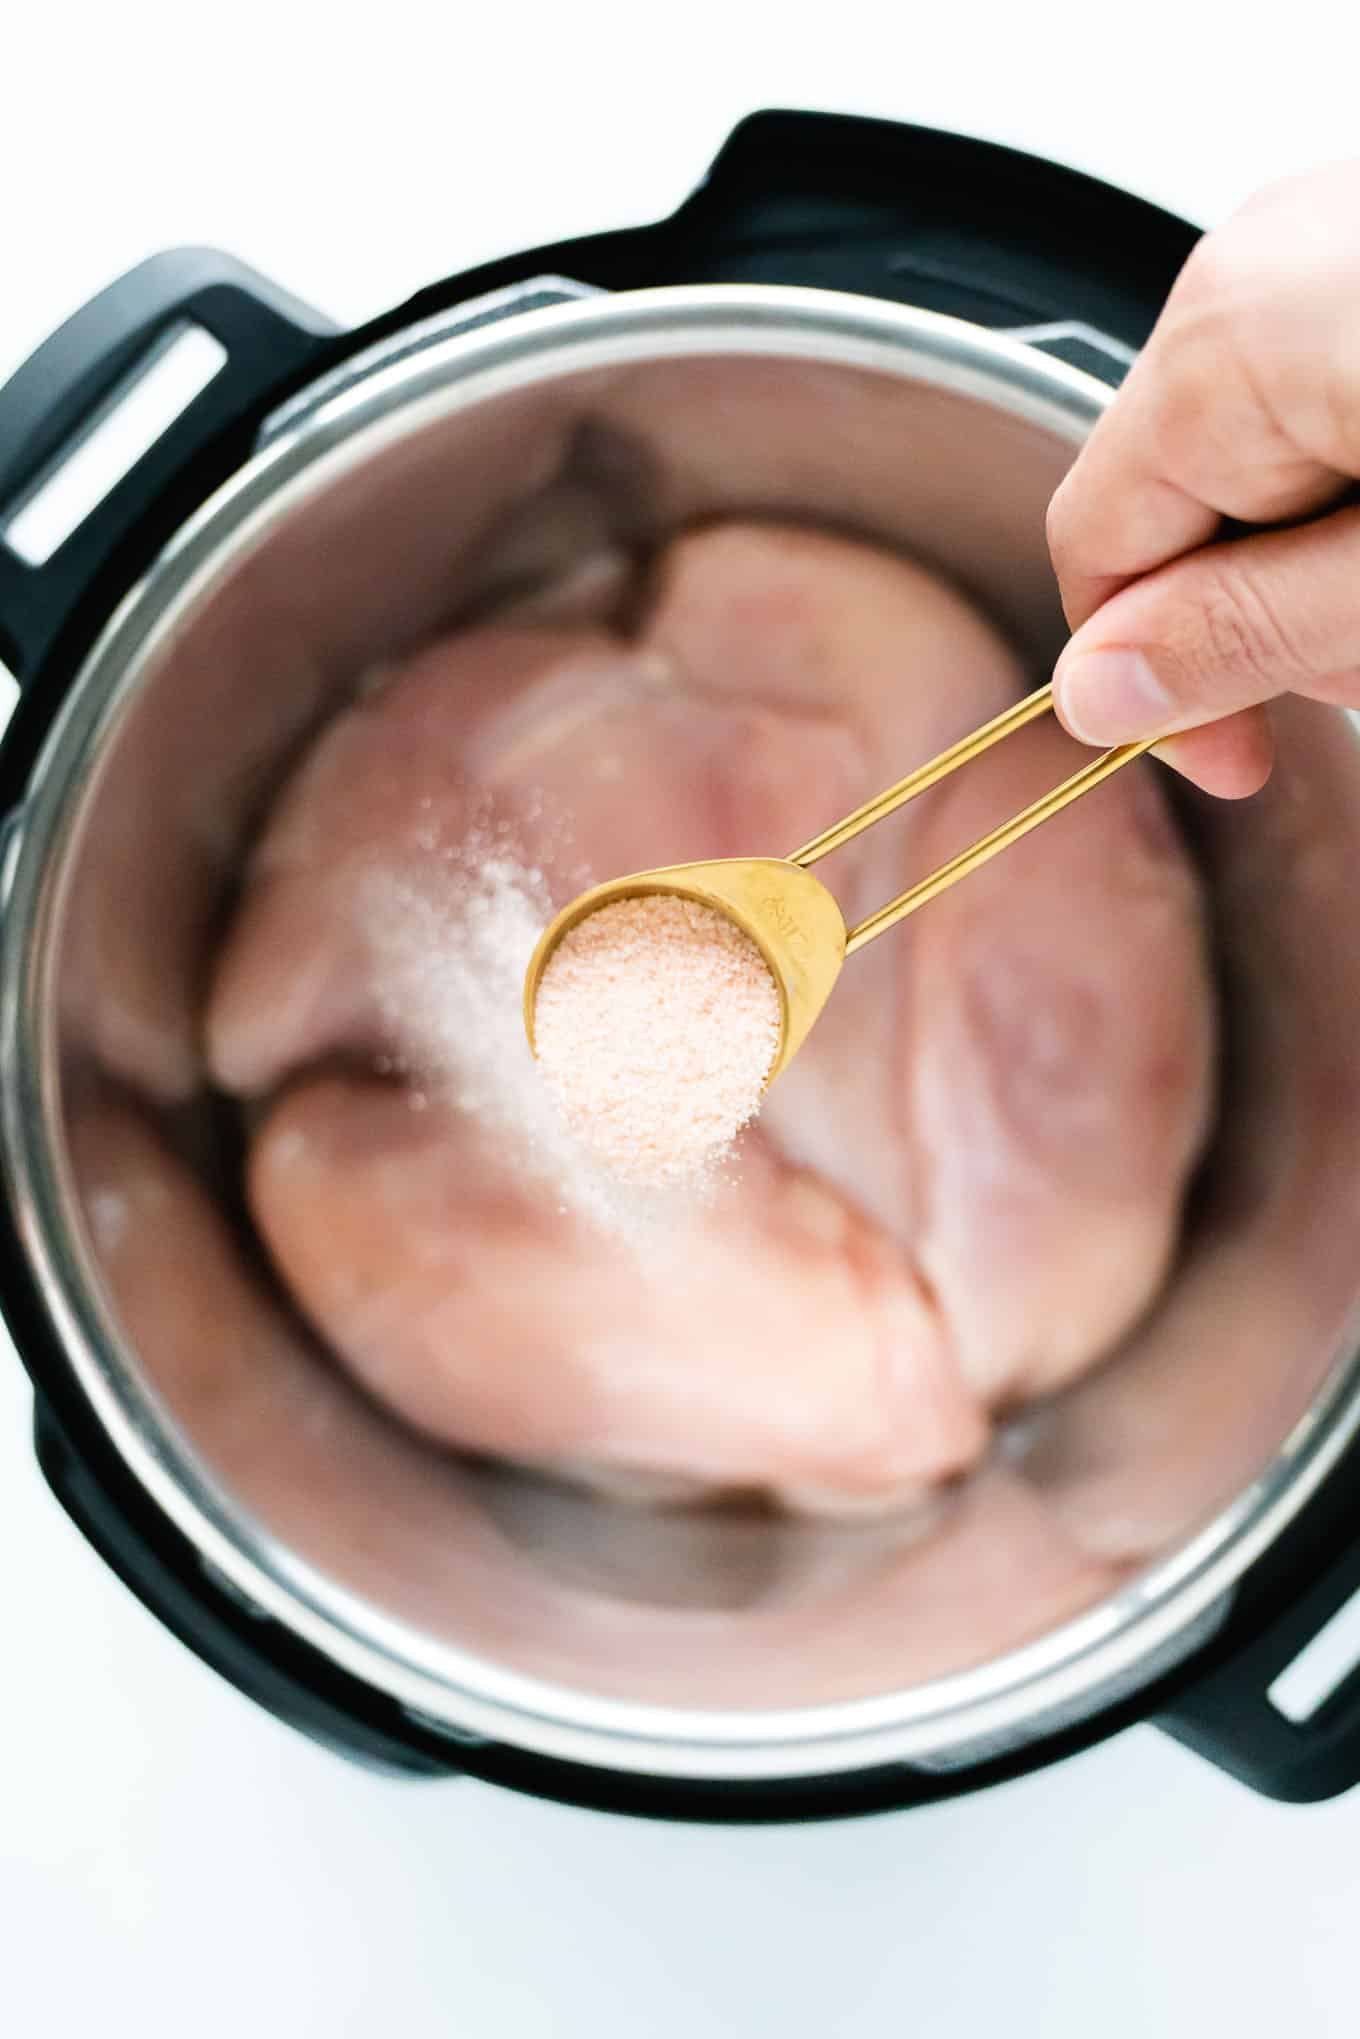 Sprinkling salt onto chicken with a teaspoon